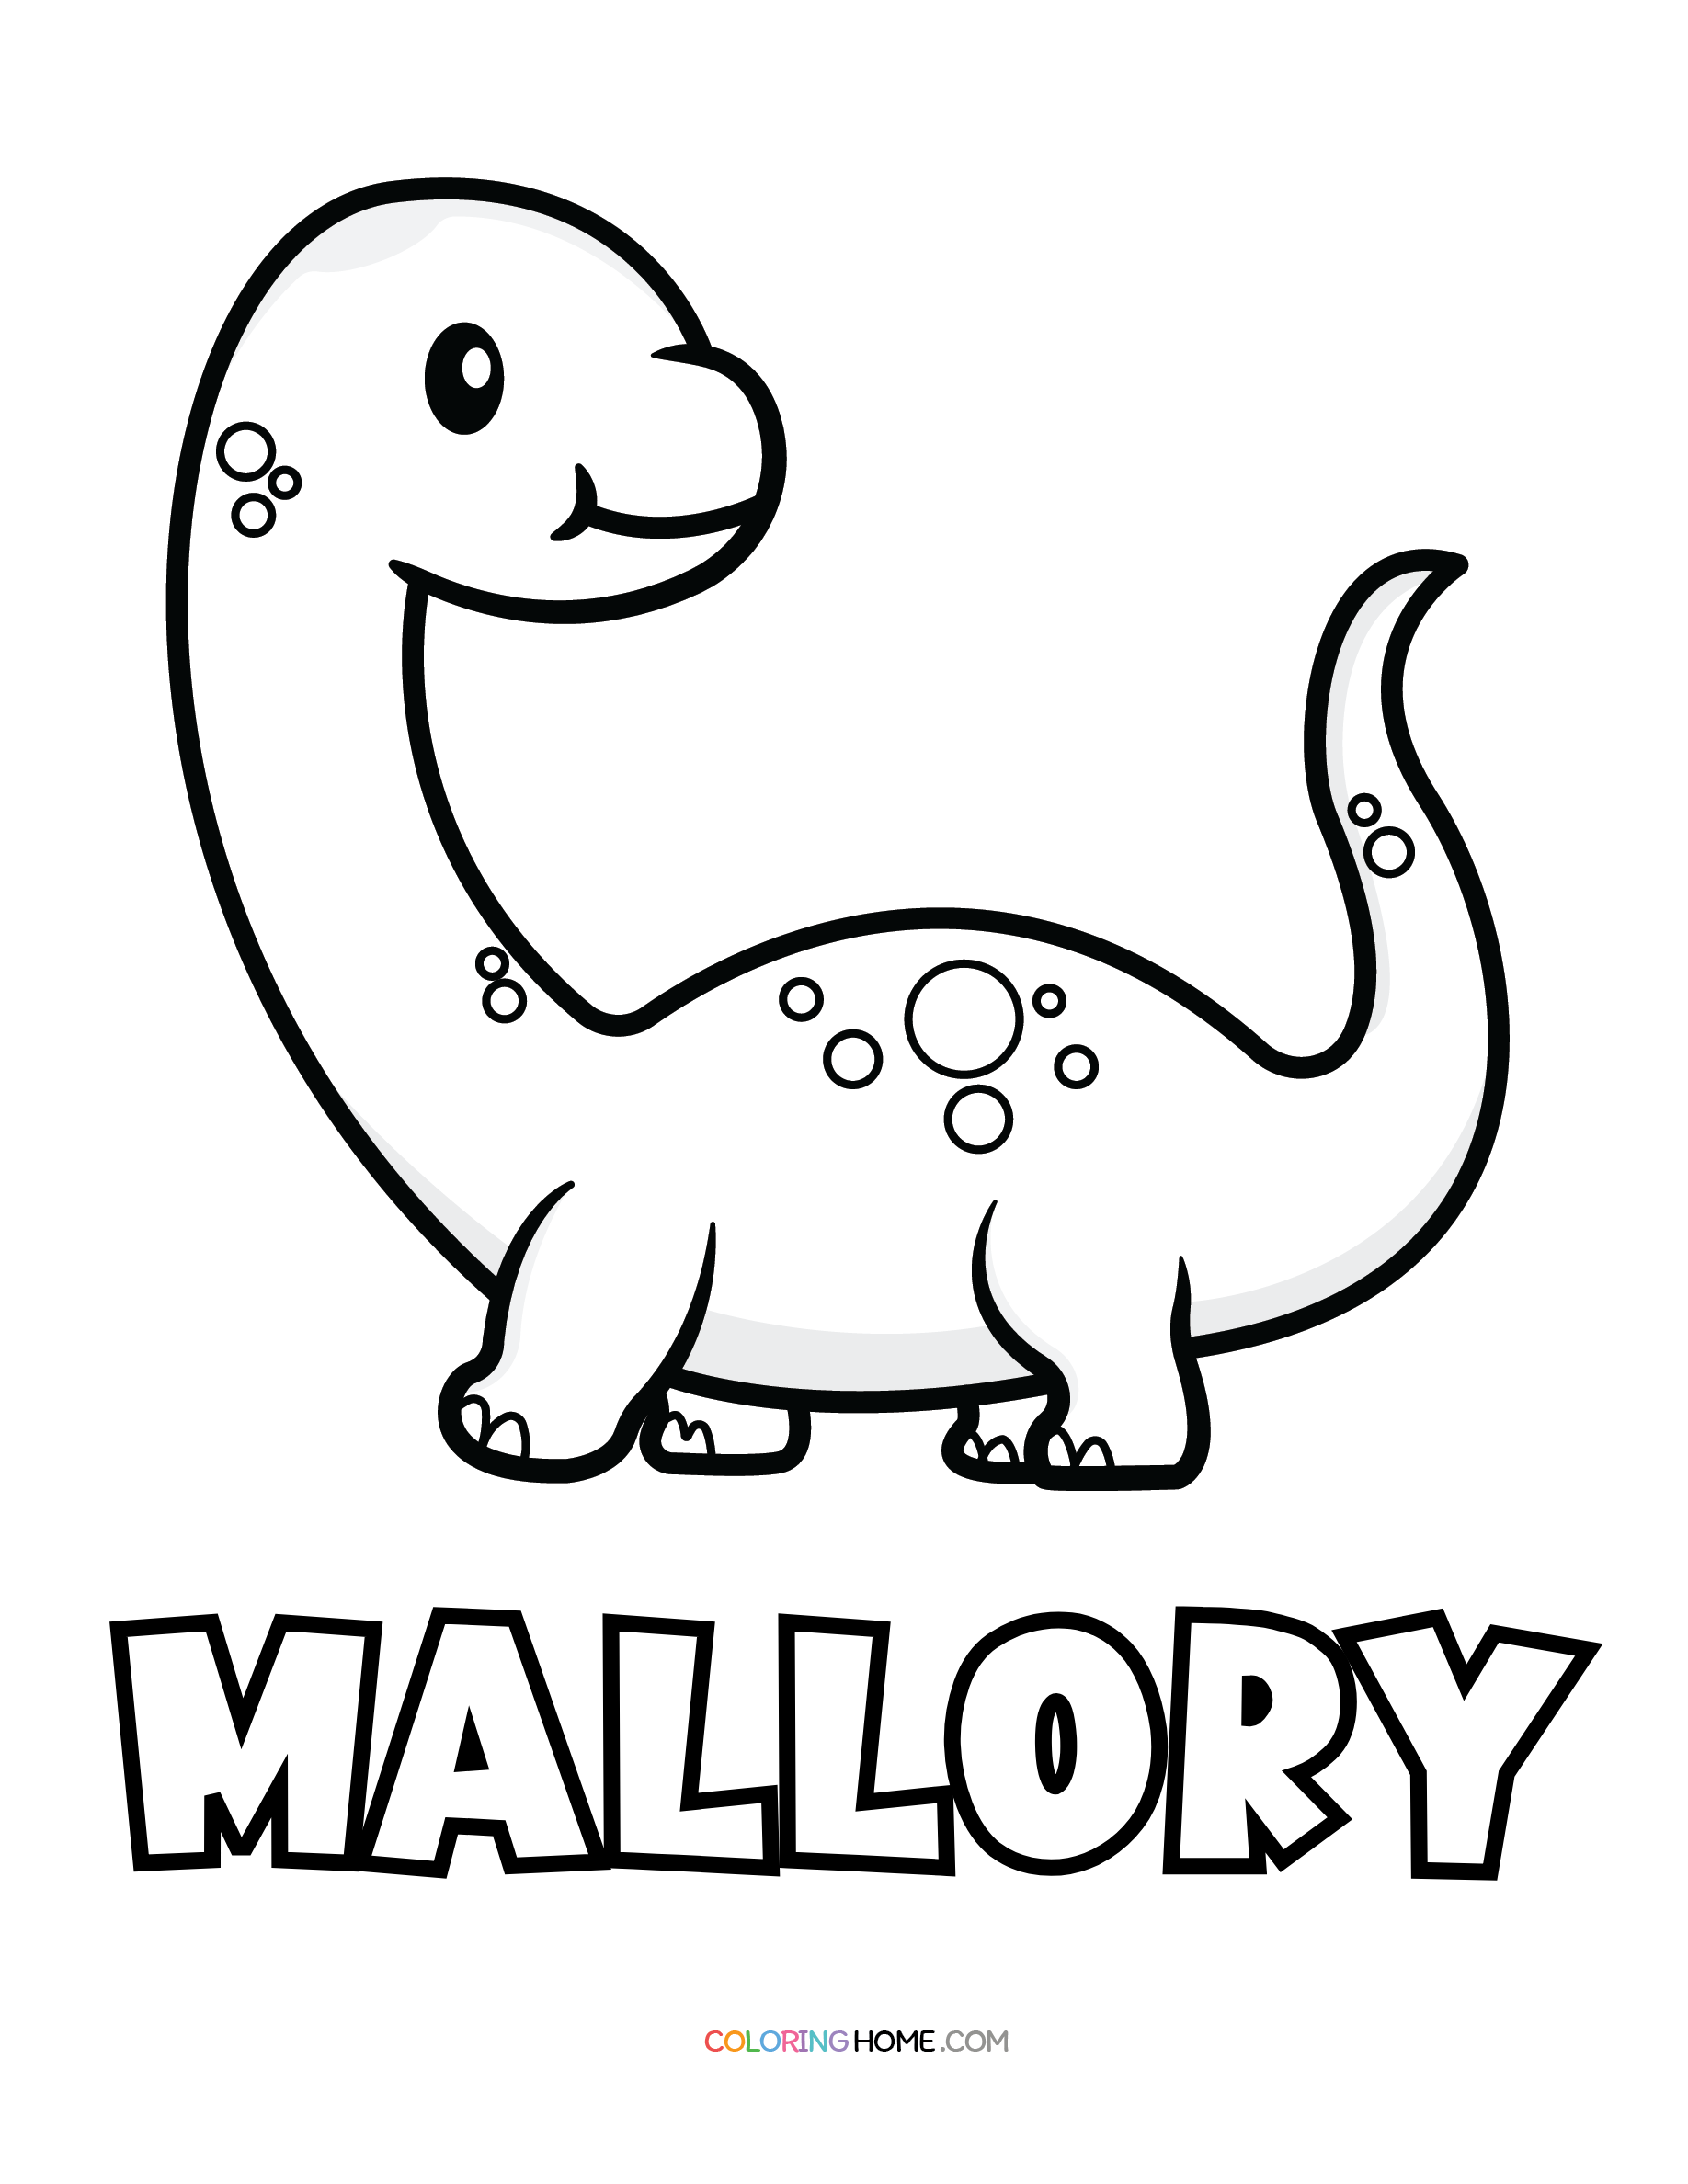 Mallory dinosaur coloring page